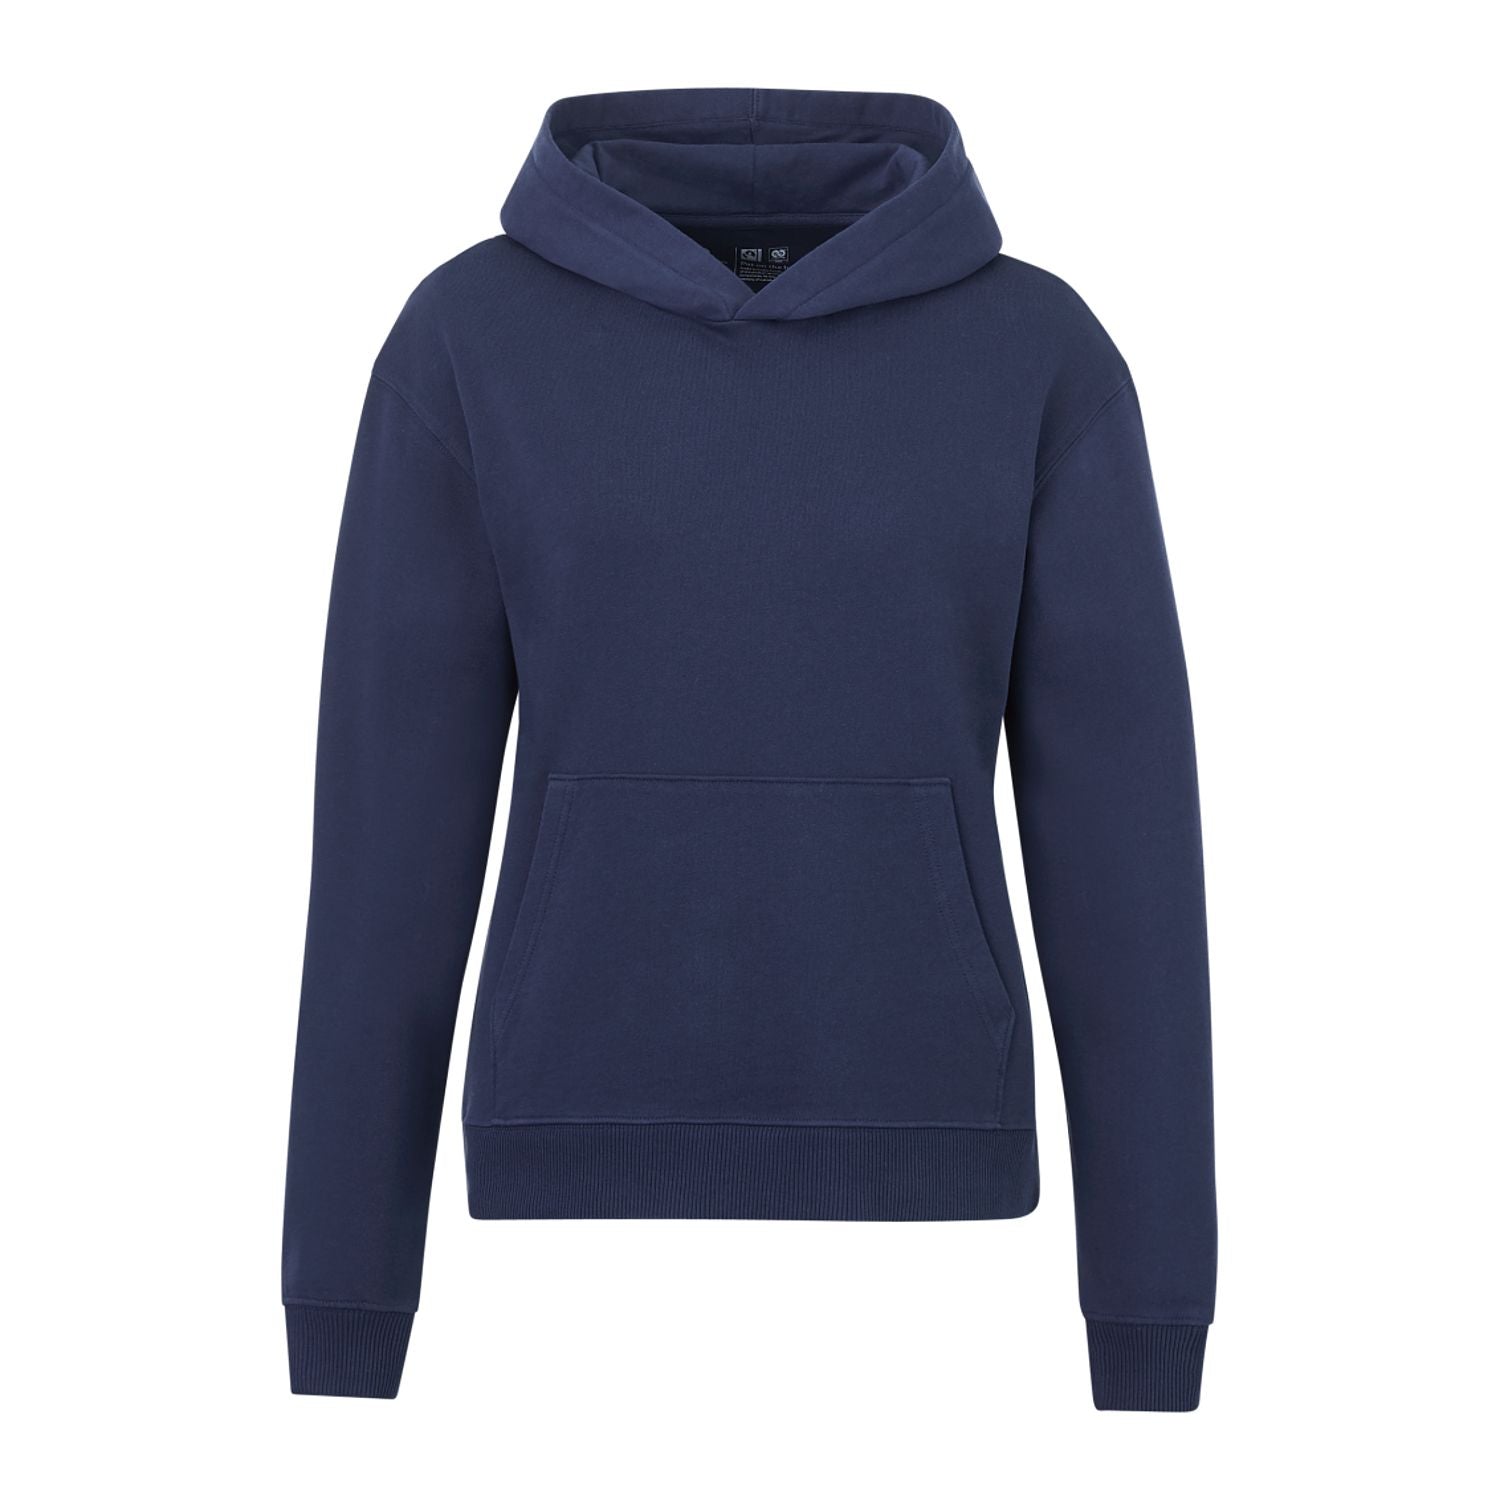 Customizable Tentree women's organic cotton classic hoodie in dress blue.